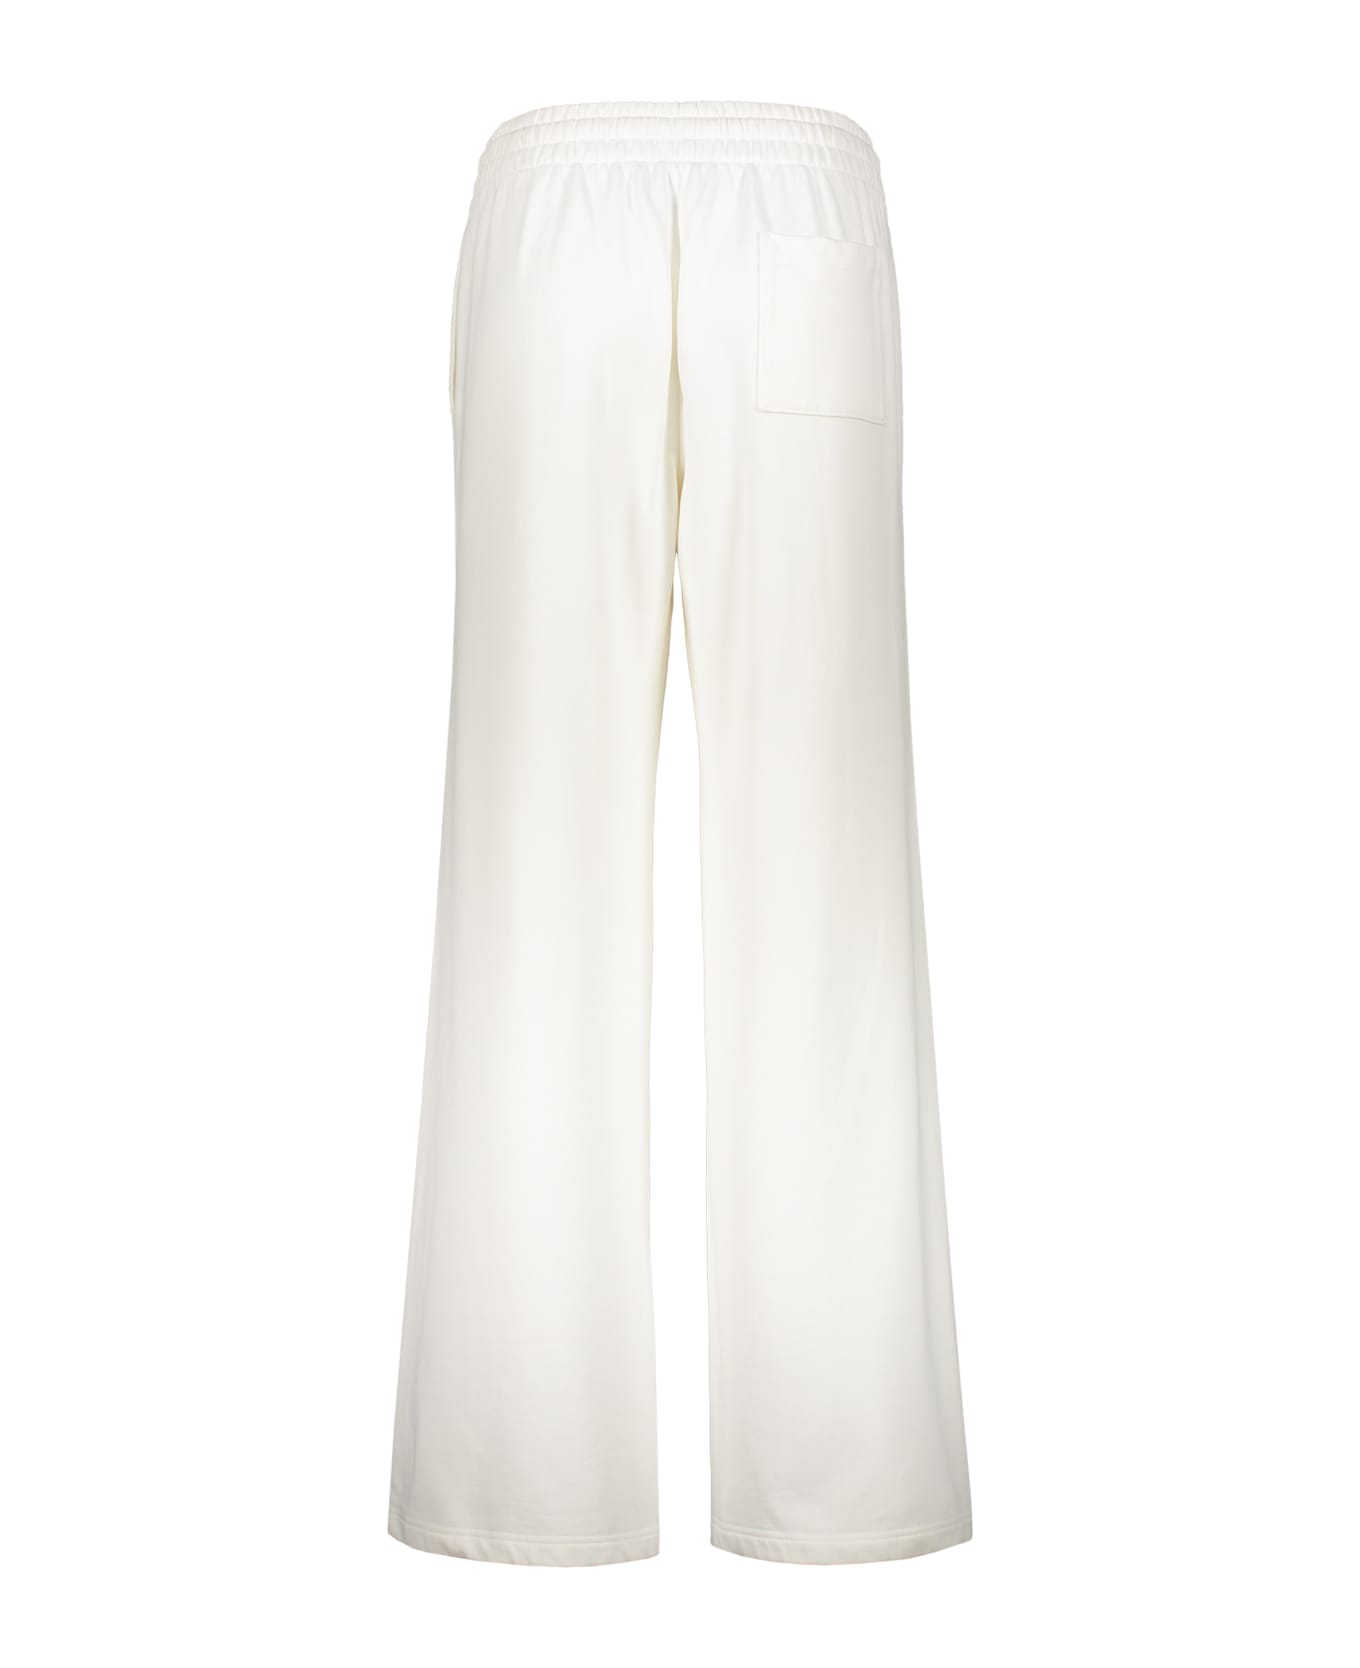 Casablanca White Cotton Pants - White